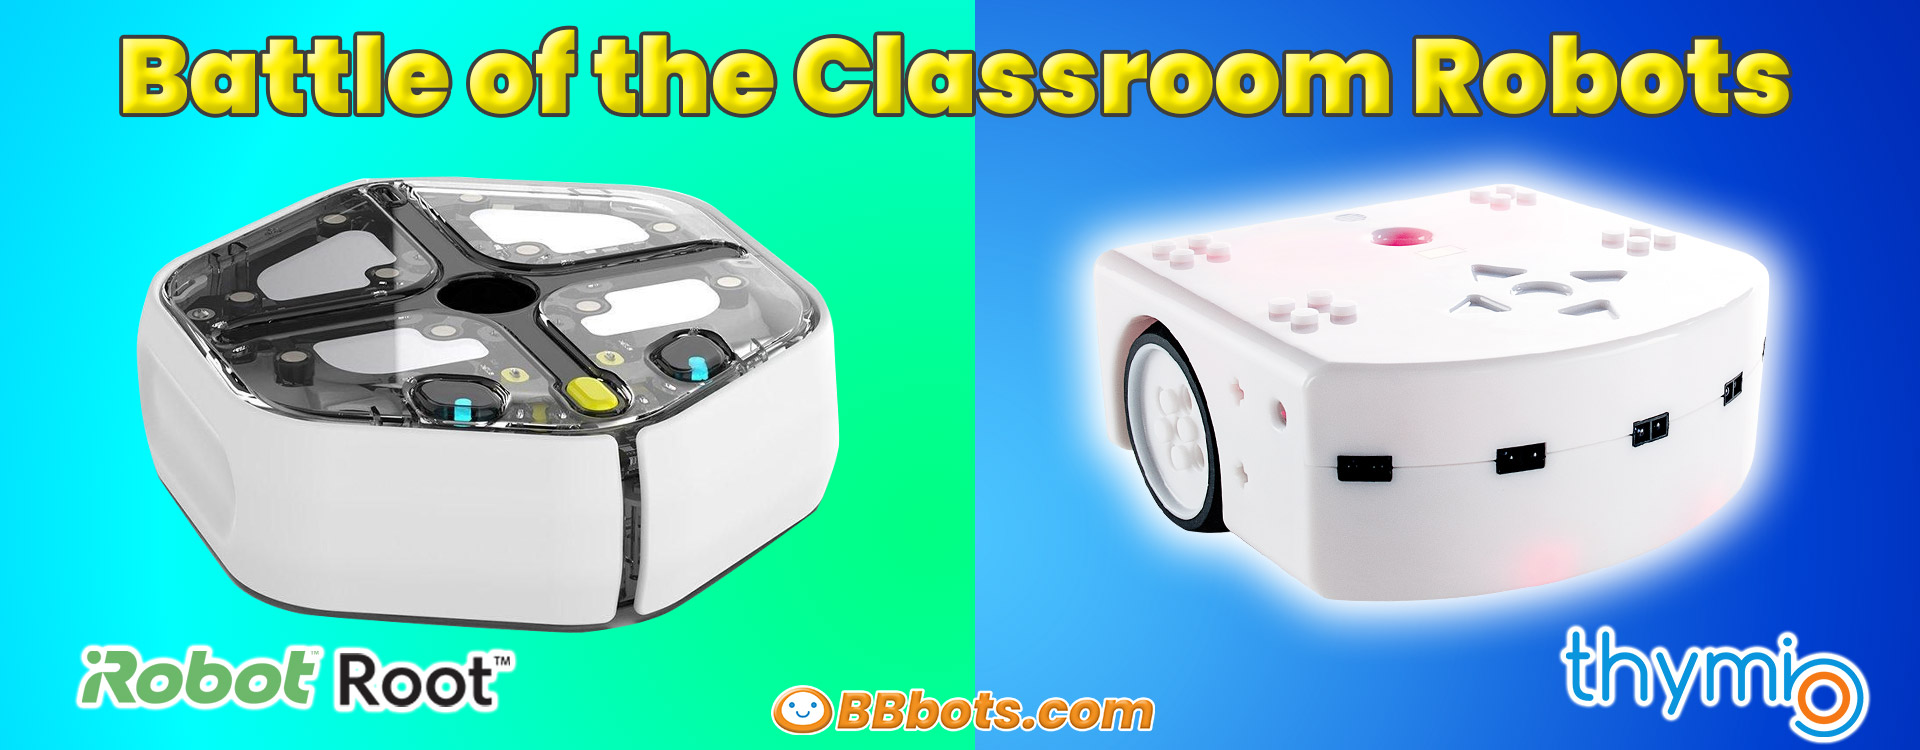 battle of classroom robot thymio iRobot root rt0